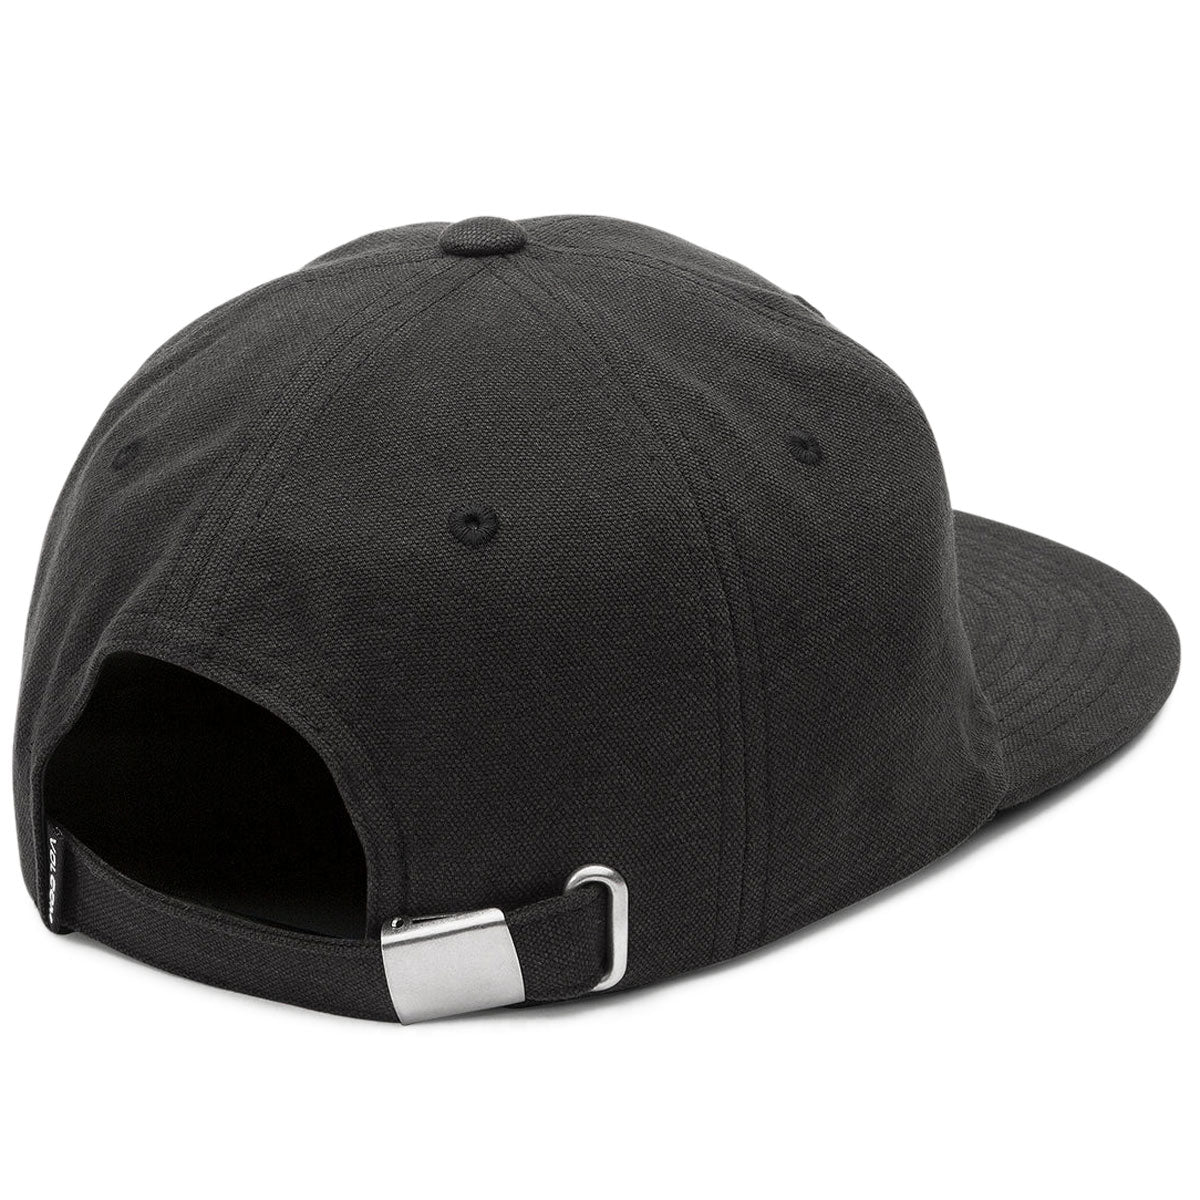 Volcom Full Stoned Dad Hat - Black image 2